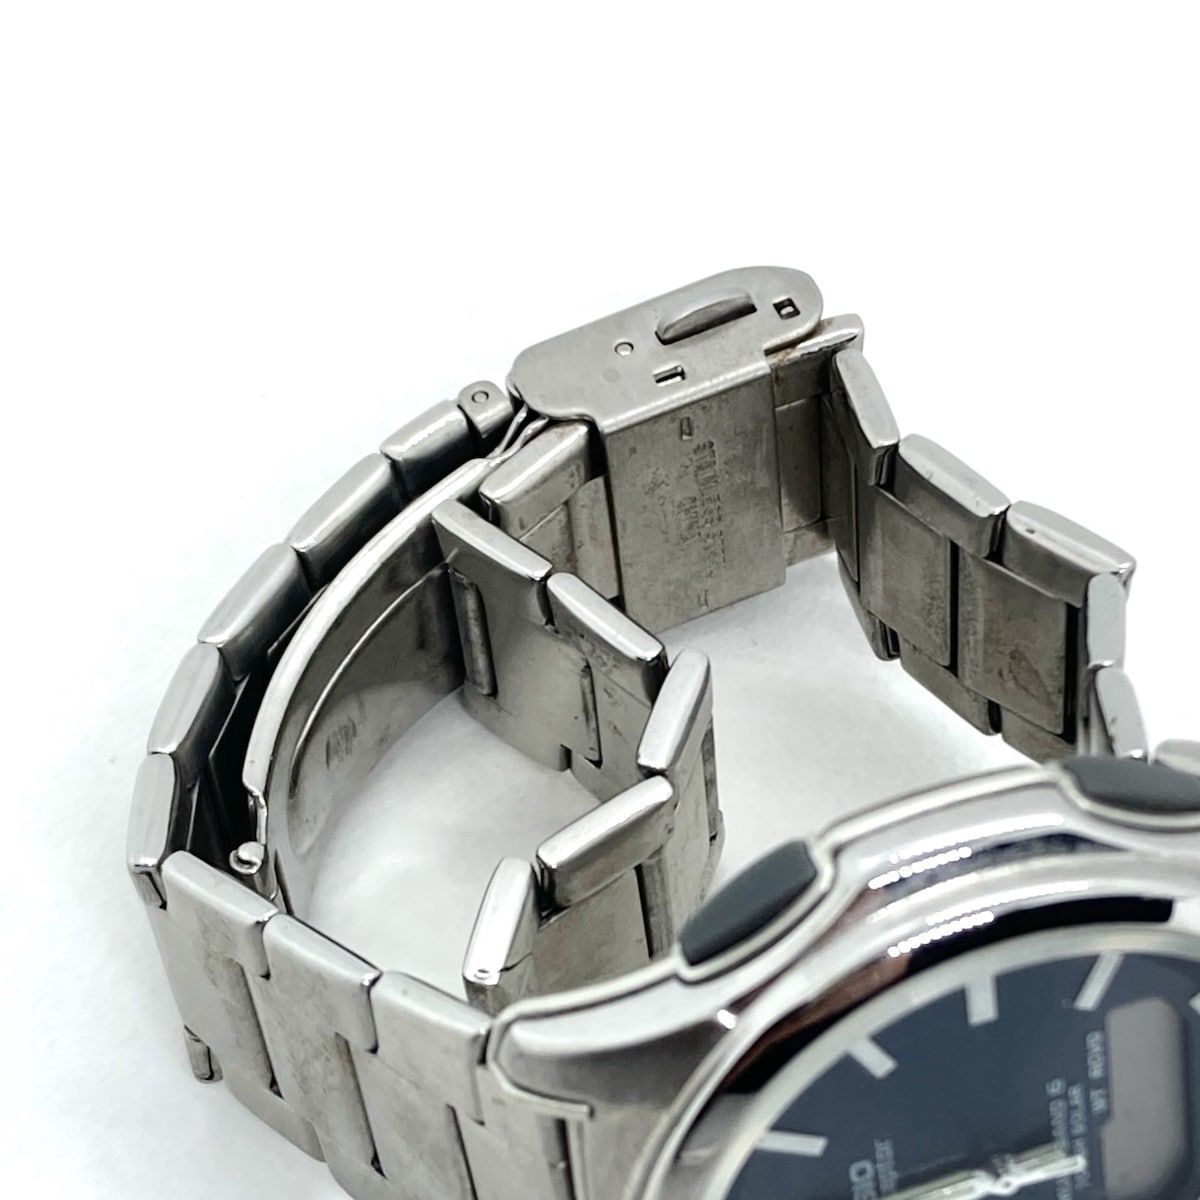 CASIO(カシオ) 腕時計美品 wave ceptor(ウェーブセプター) WVA-M630 メンズ タフソーラー/電波 ネイビー - メルカリ